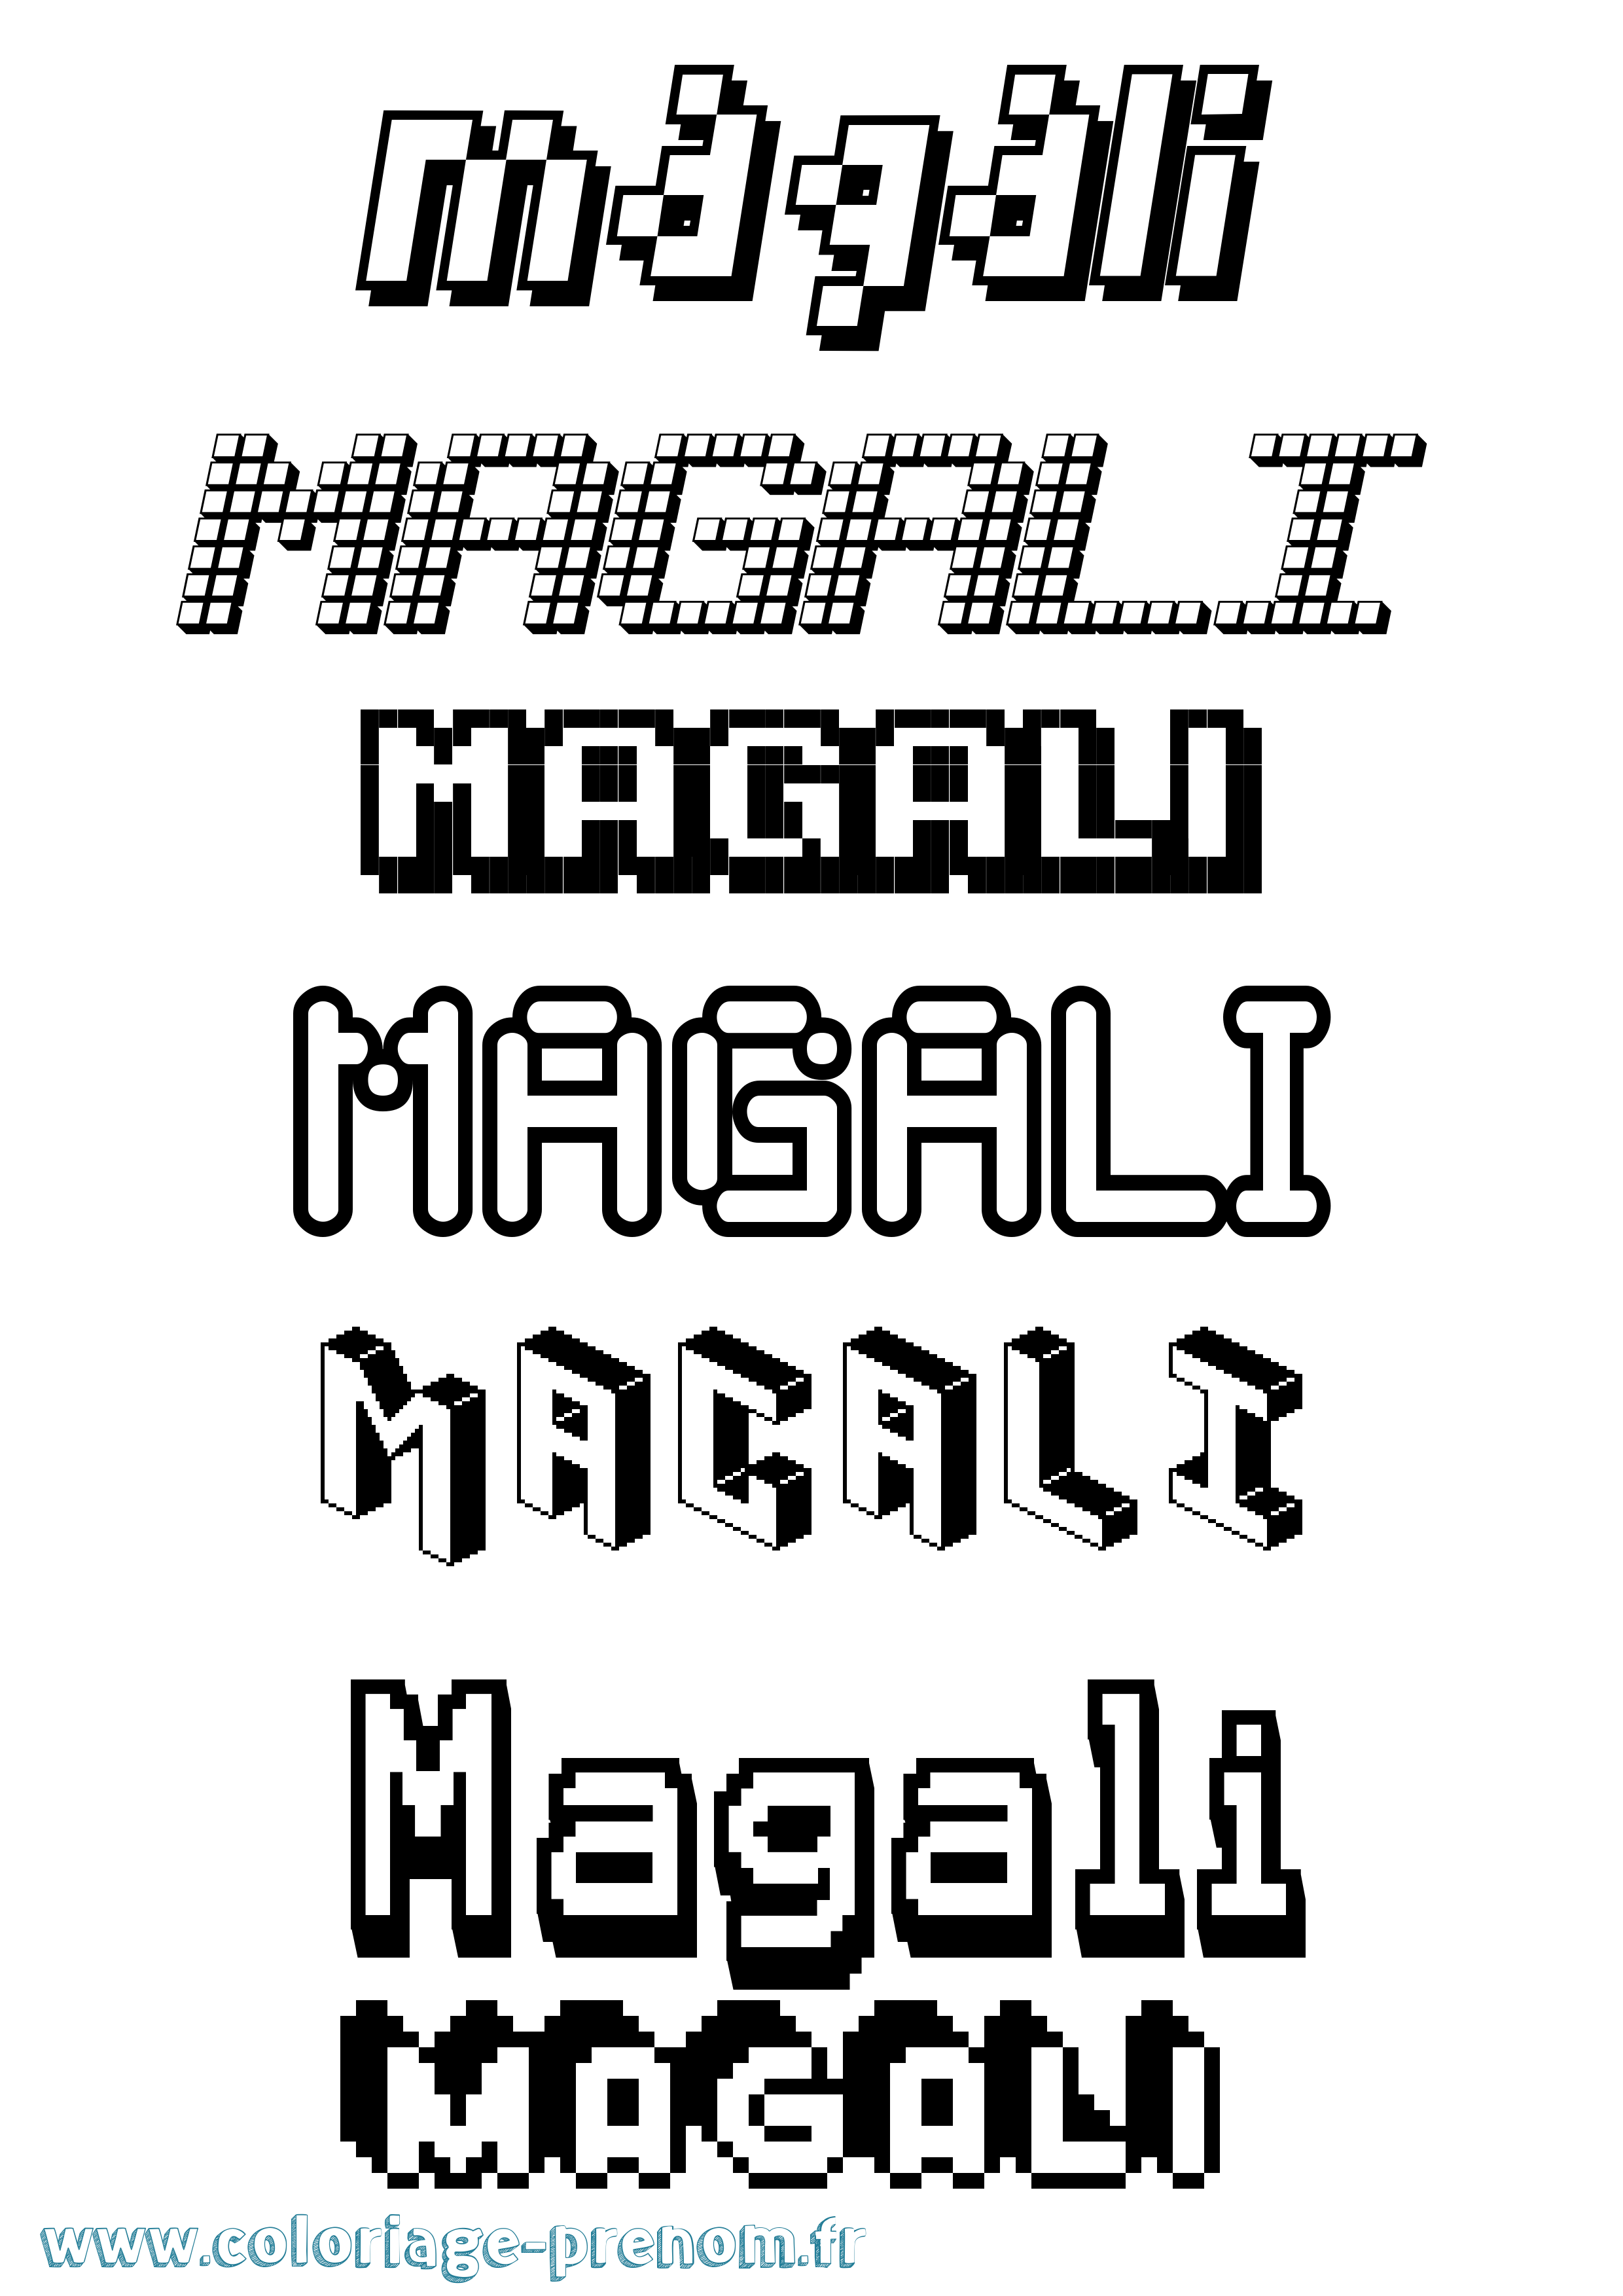 Coloriage prénom Magali Pixel